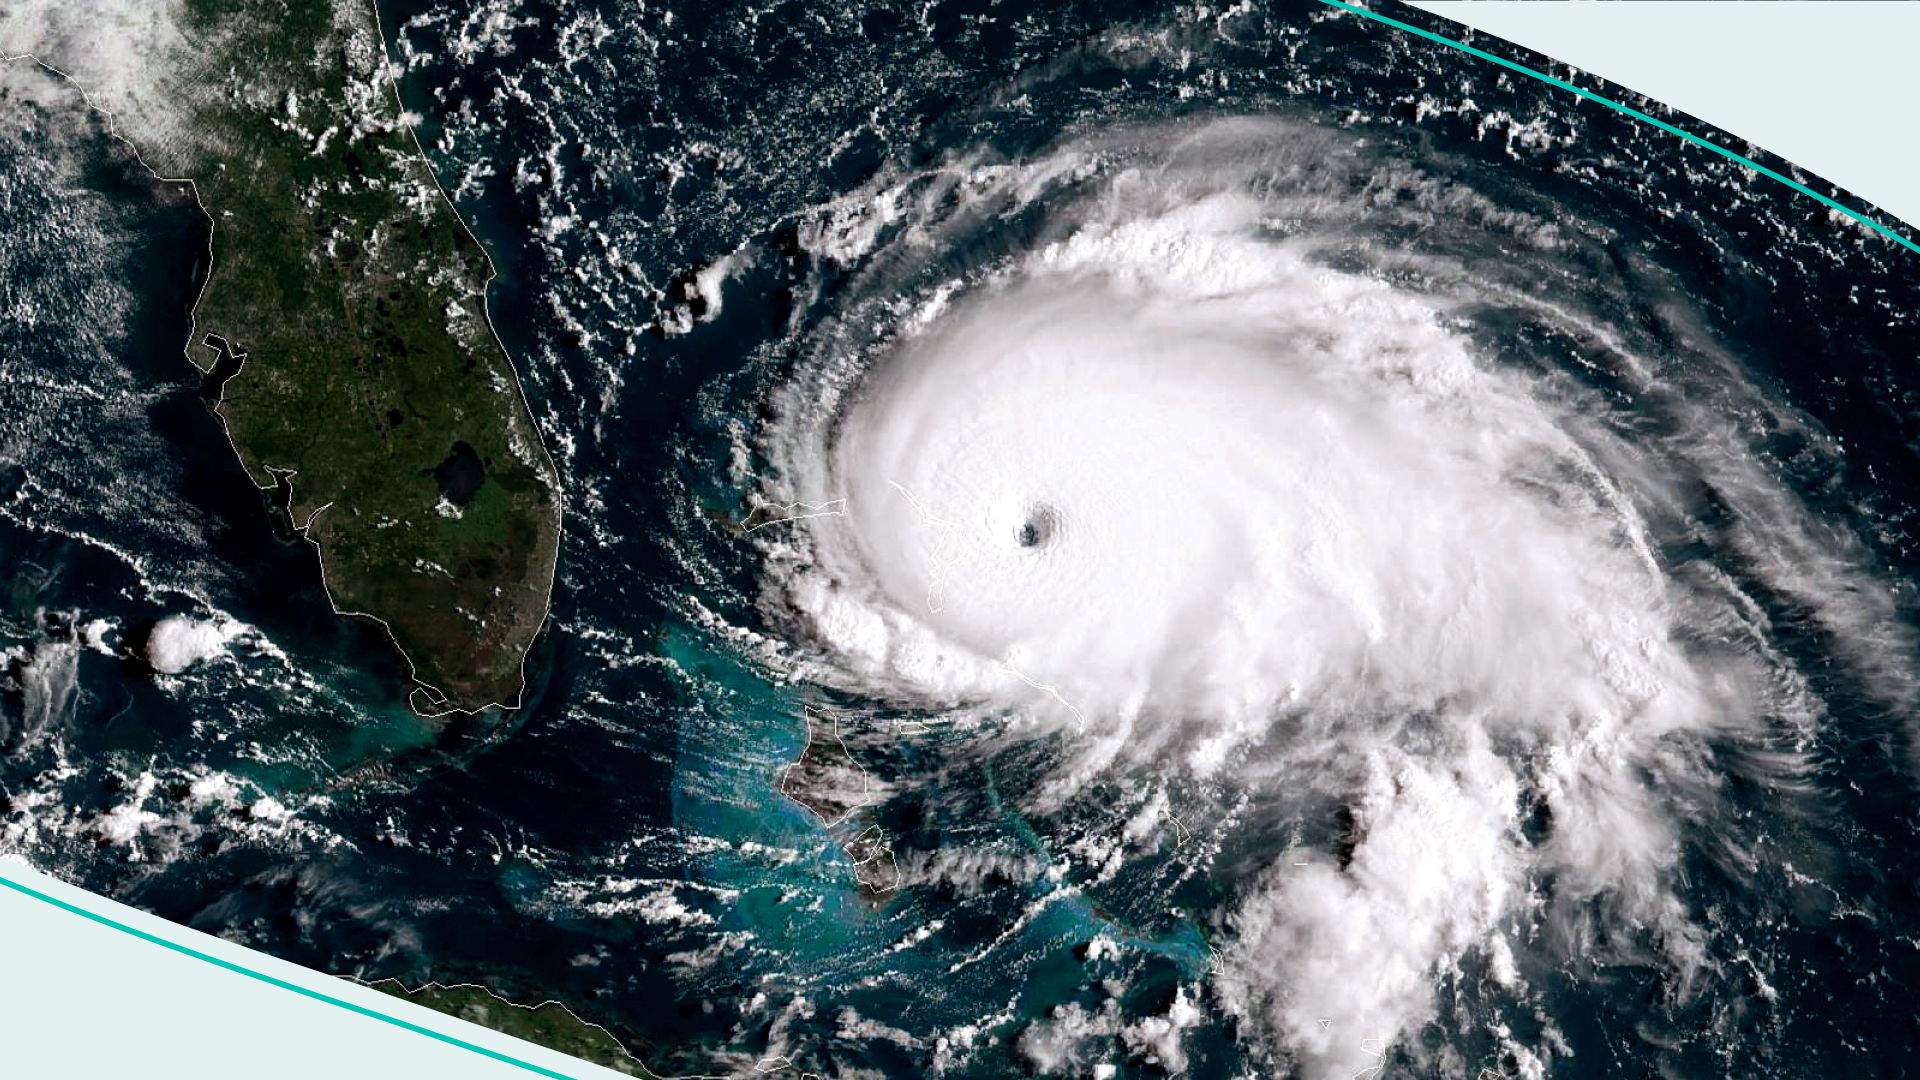 Hurricane Dorian tracking towards the Florida coast taken on September 1, 2019 in the Atlantic Ocean.